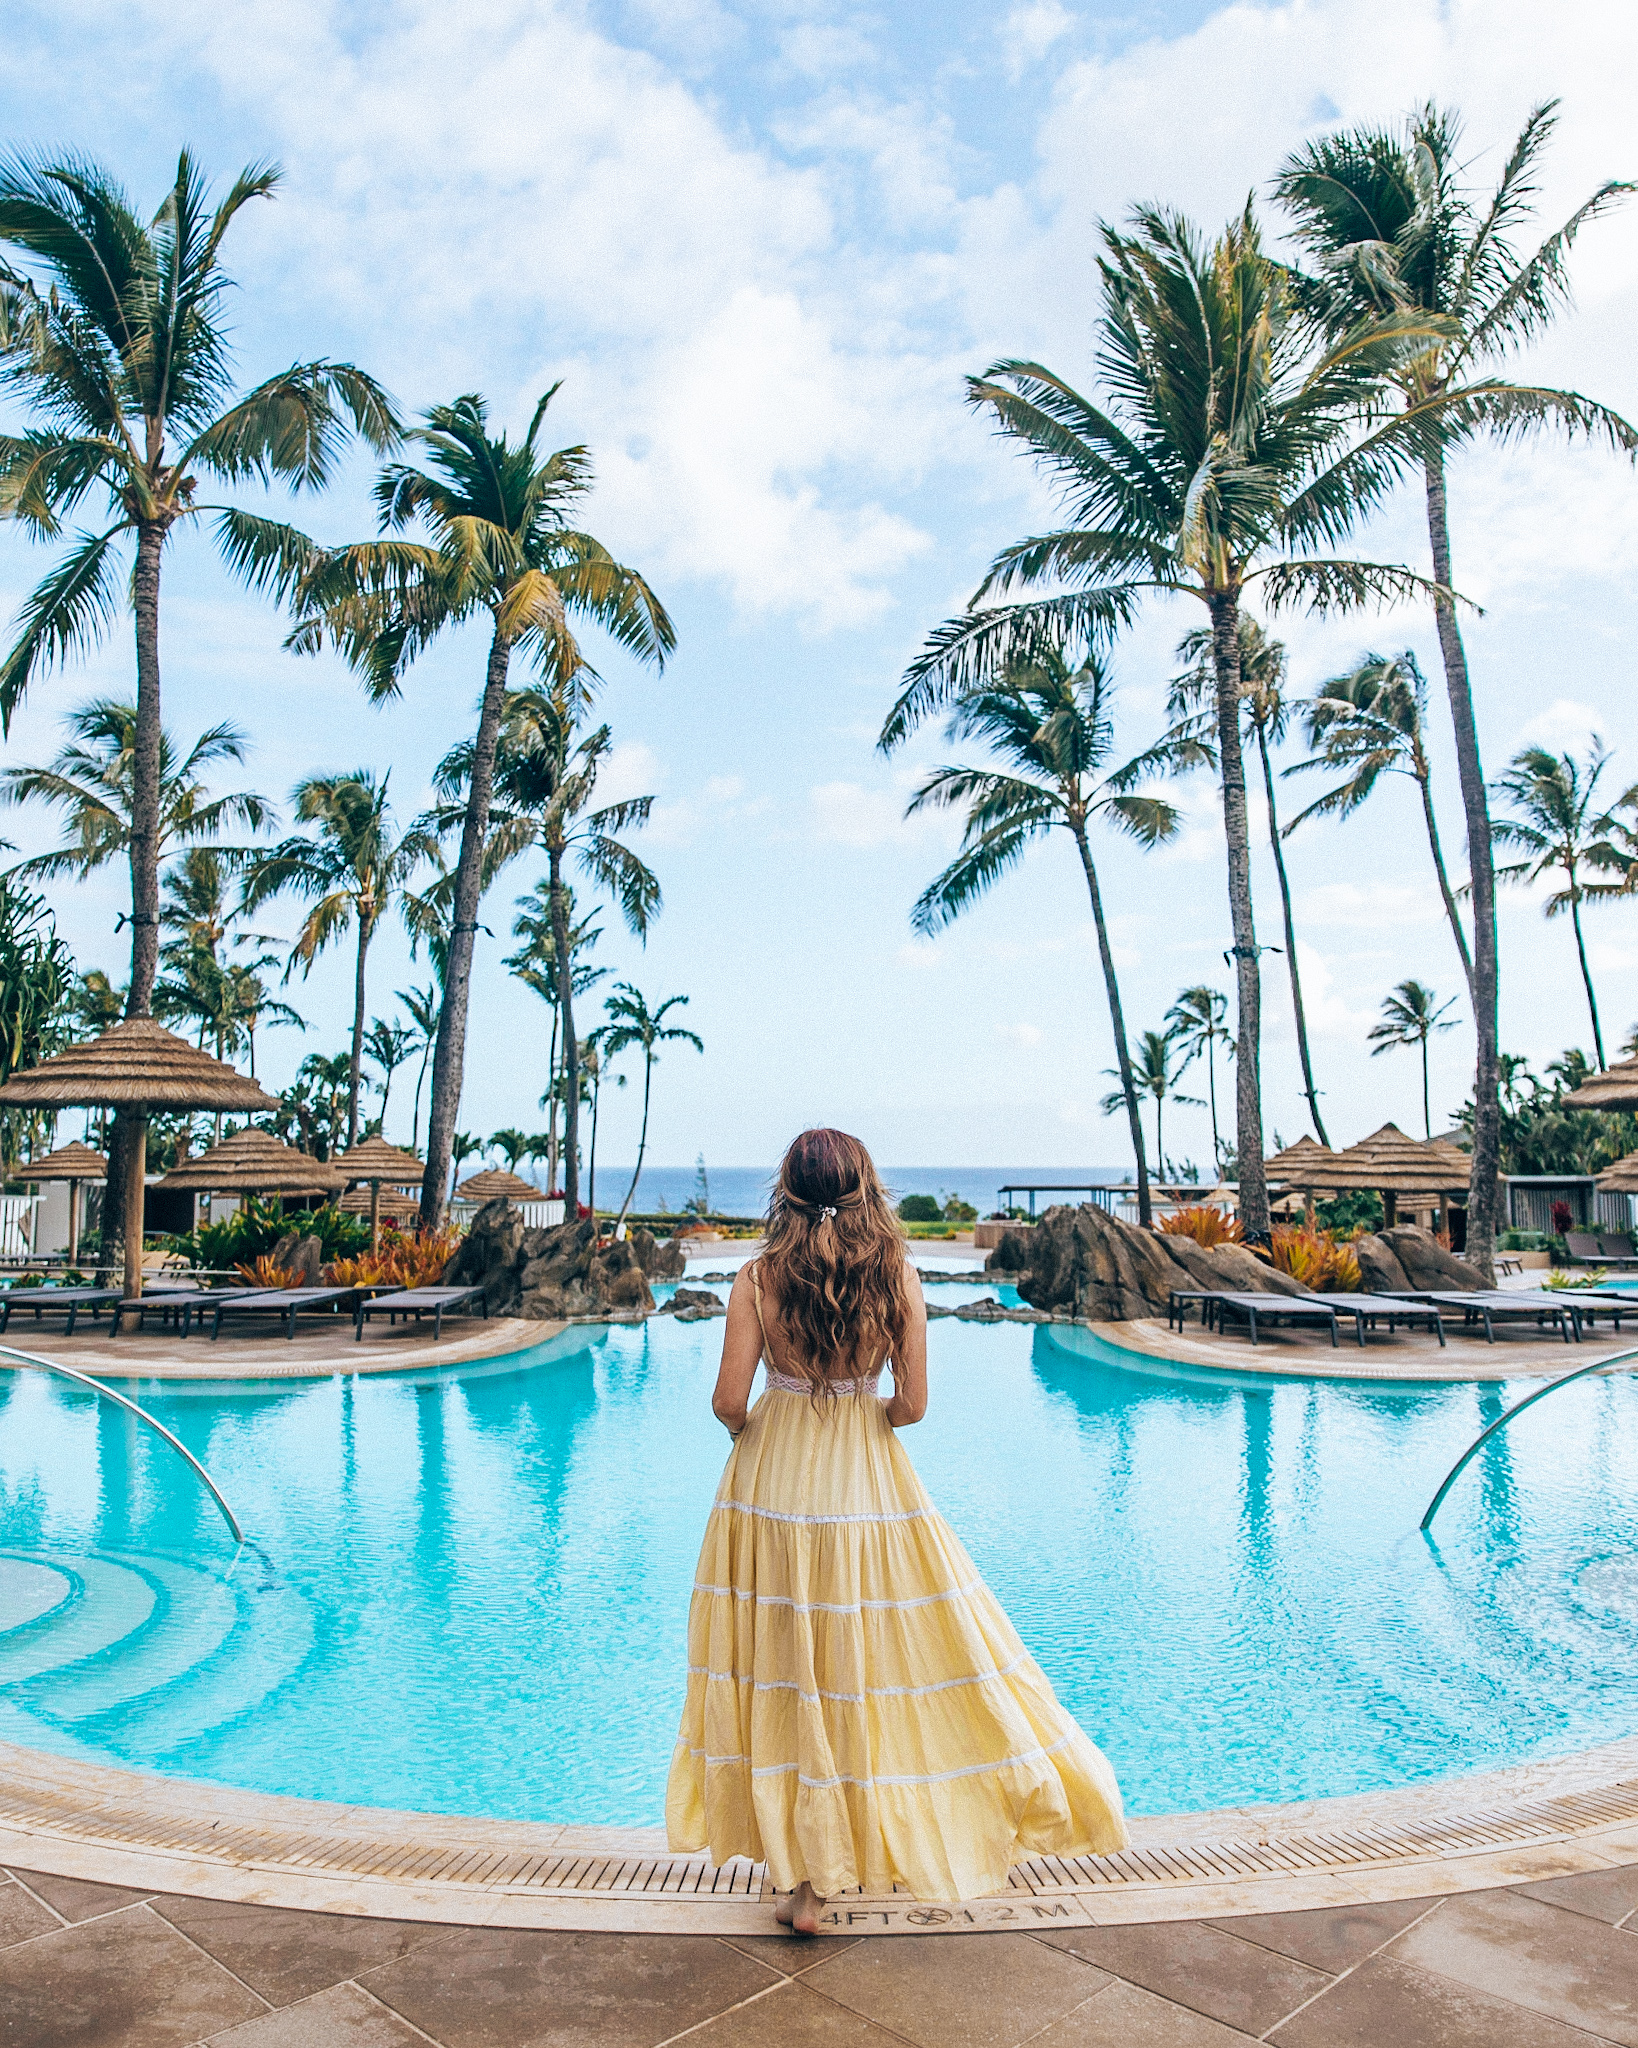 The Ritz-Carlton Maui: Hotel Review